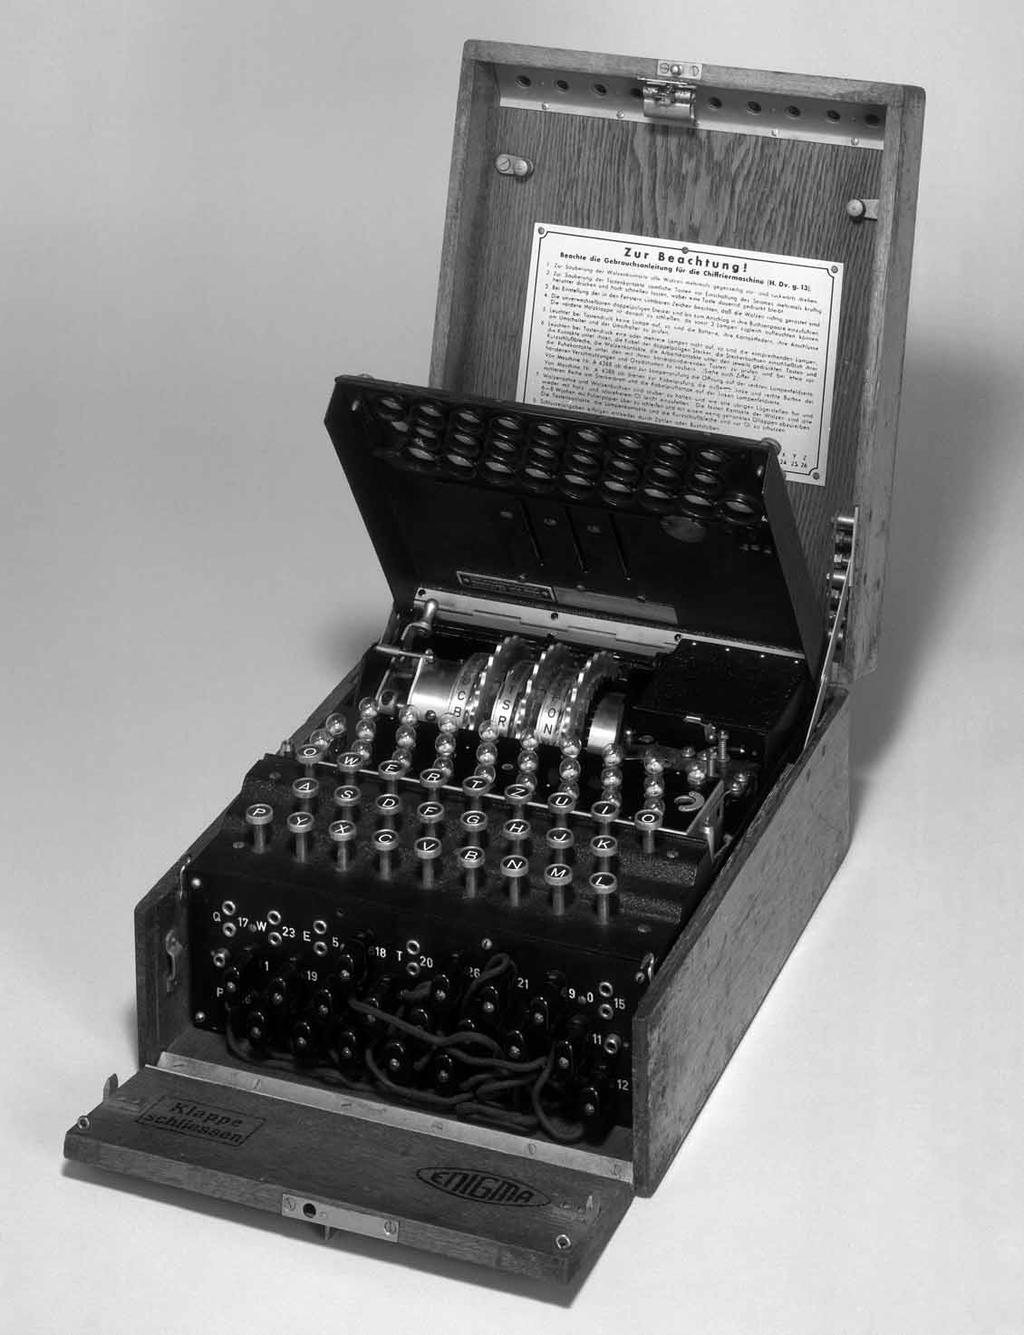 An Enigma Machine (image courtesy